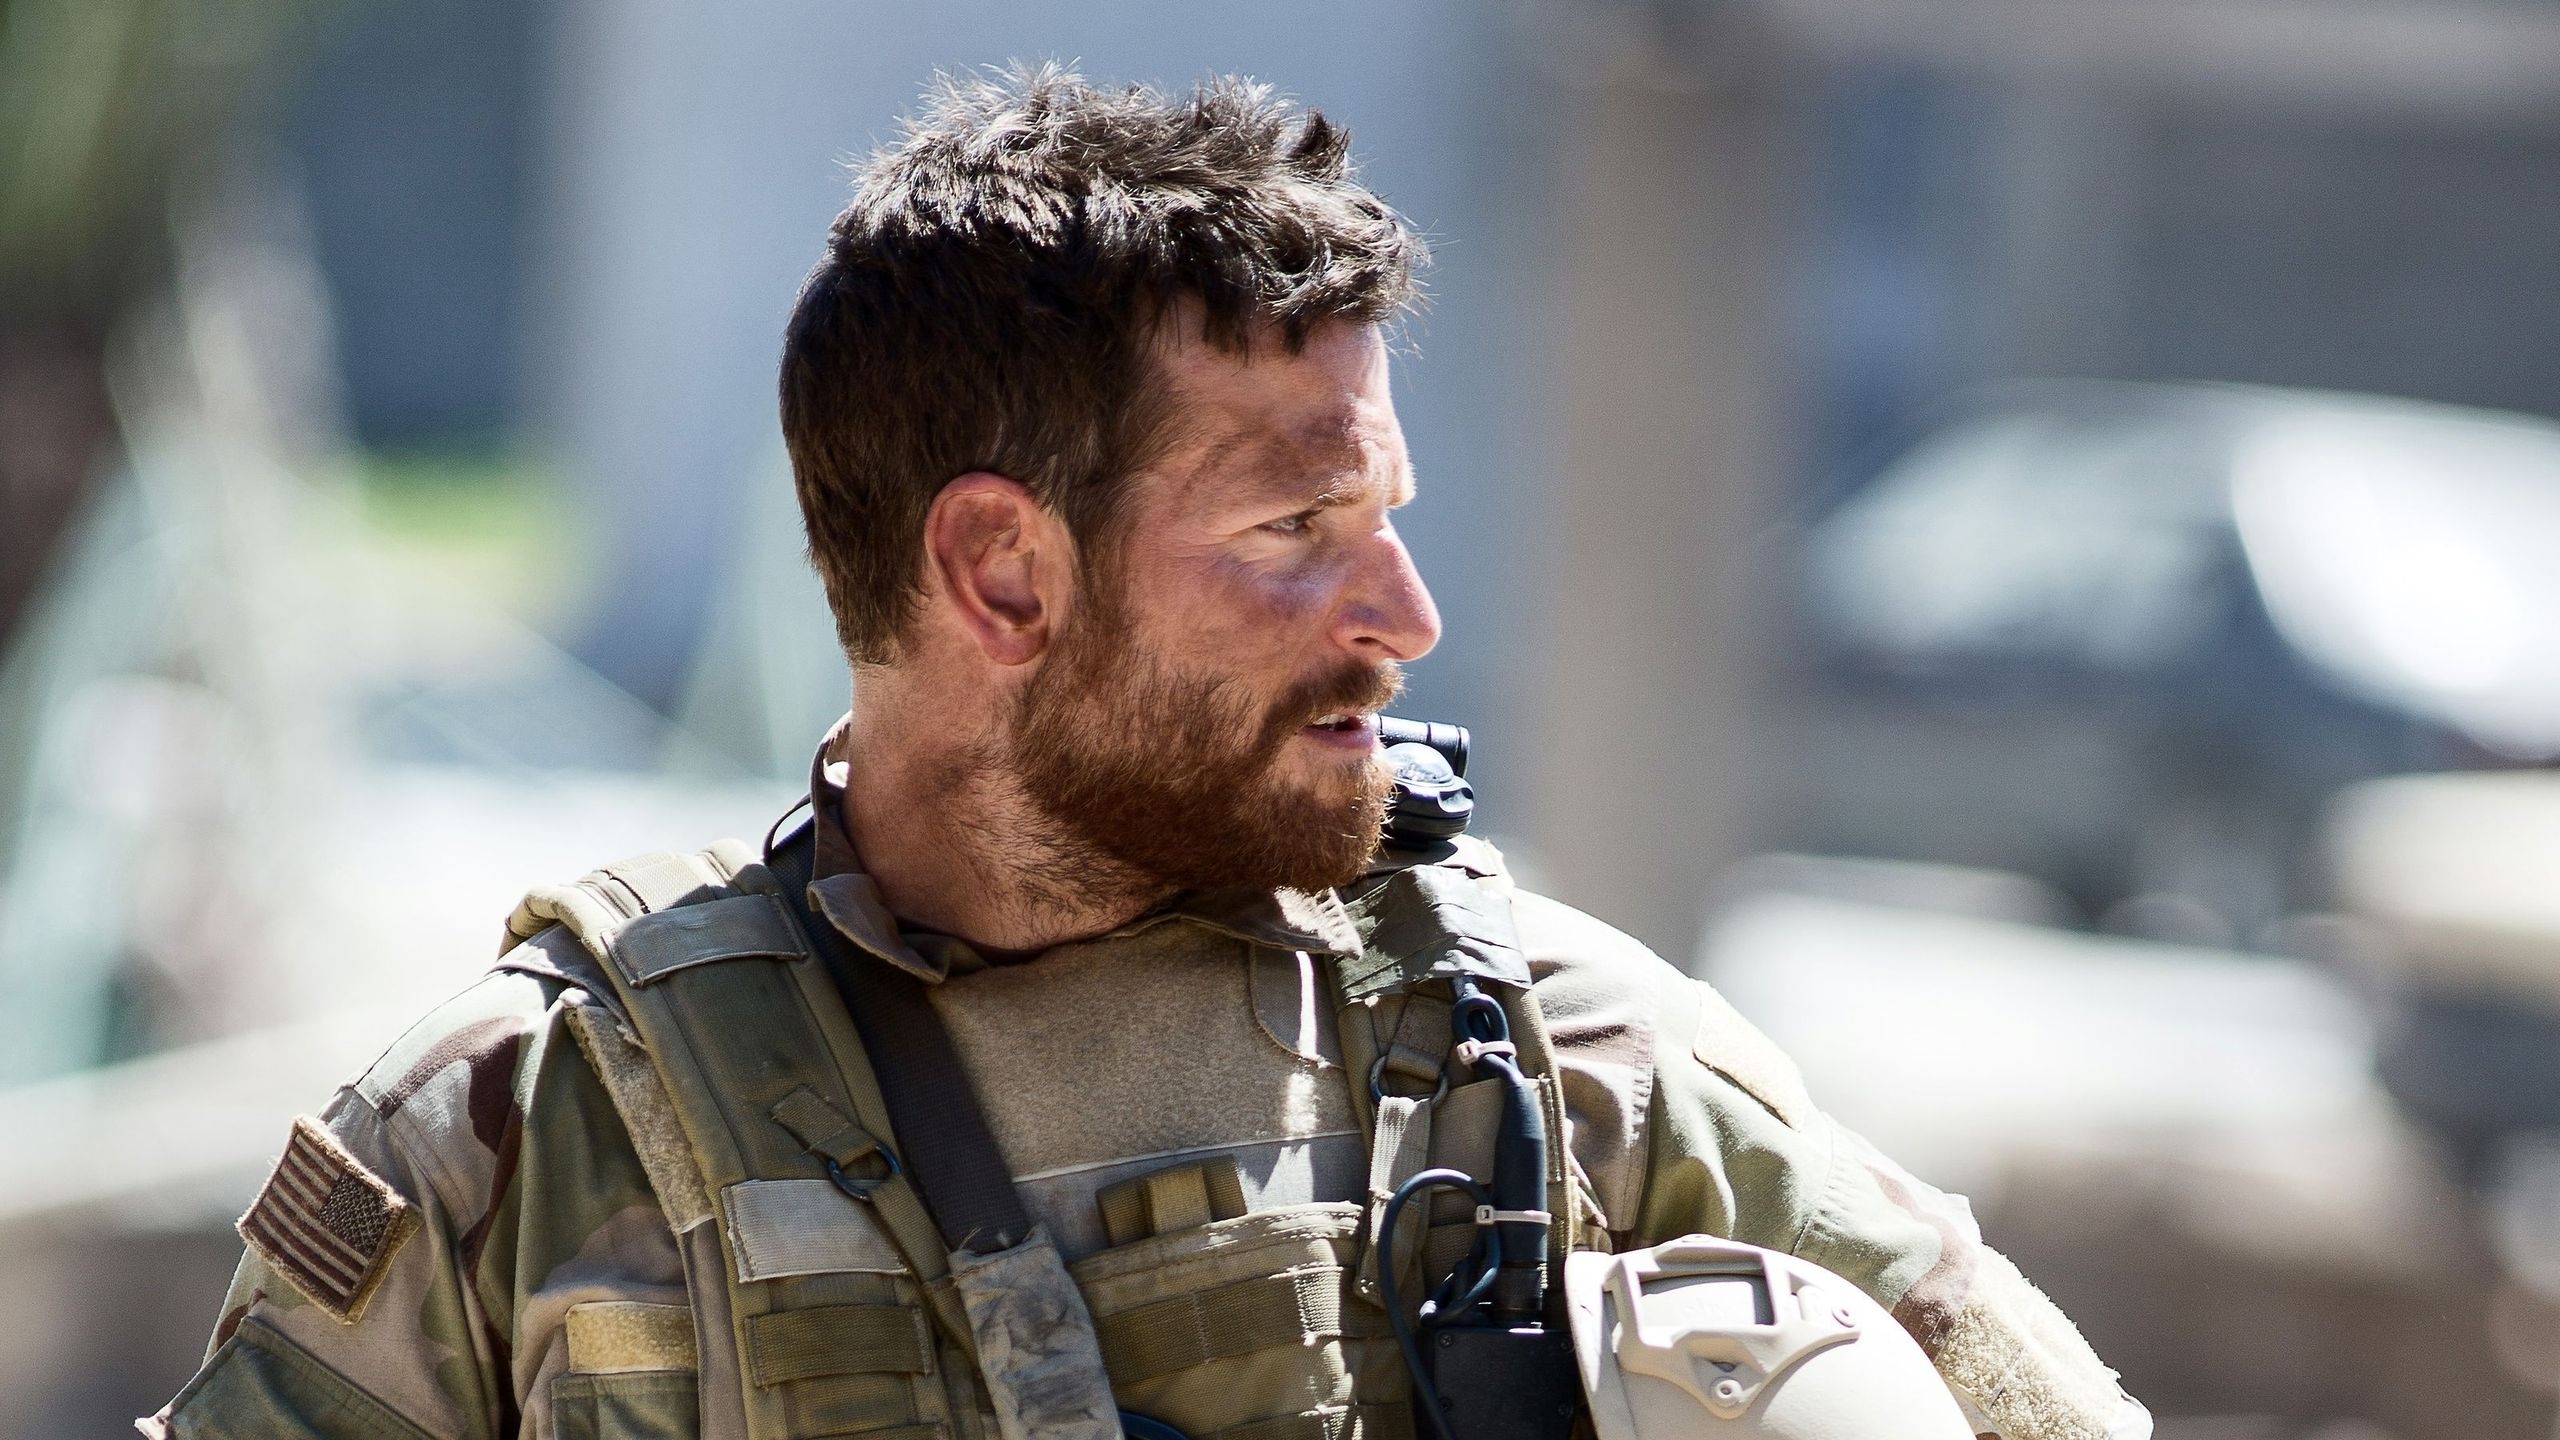 Bradley Cooper in American Sniper for 2560x1440 HDTV resolution